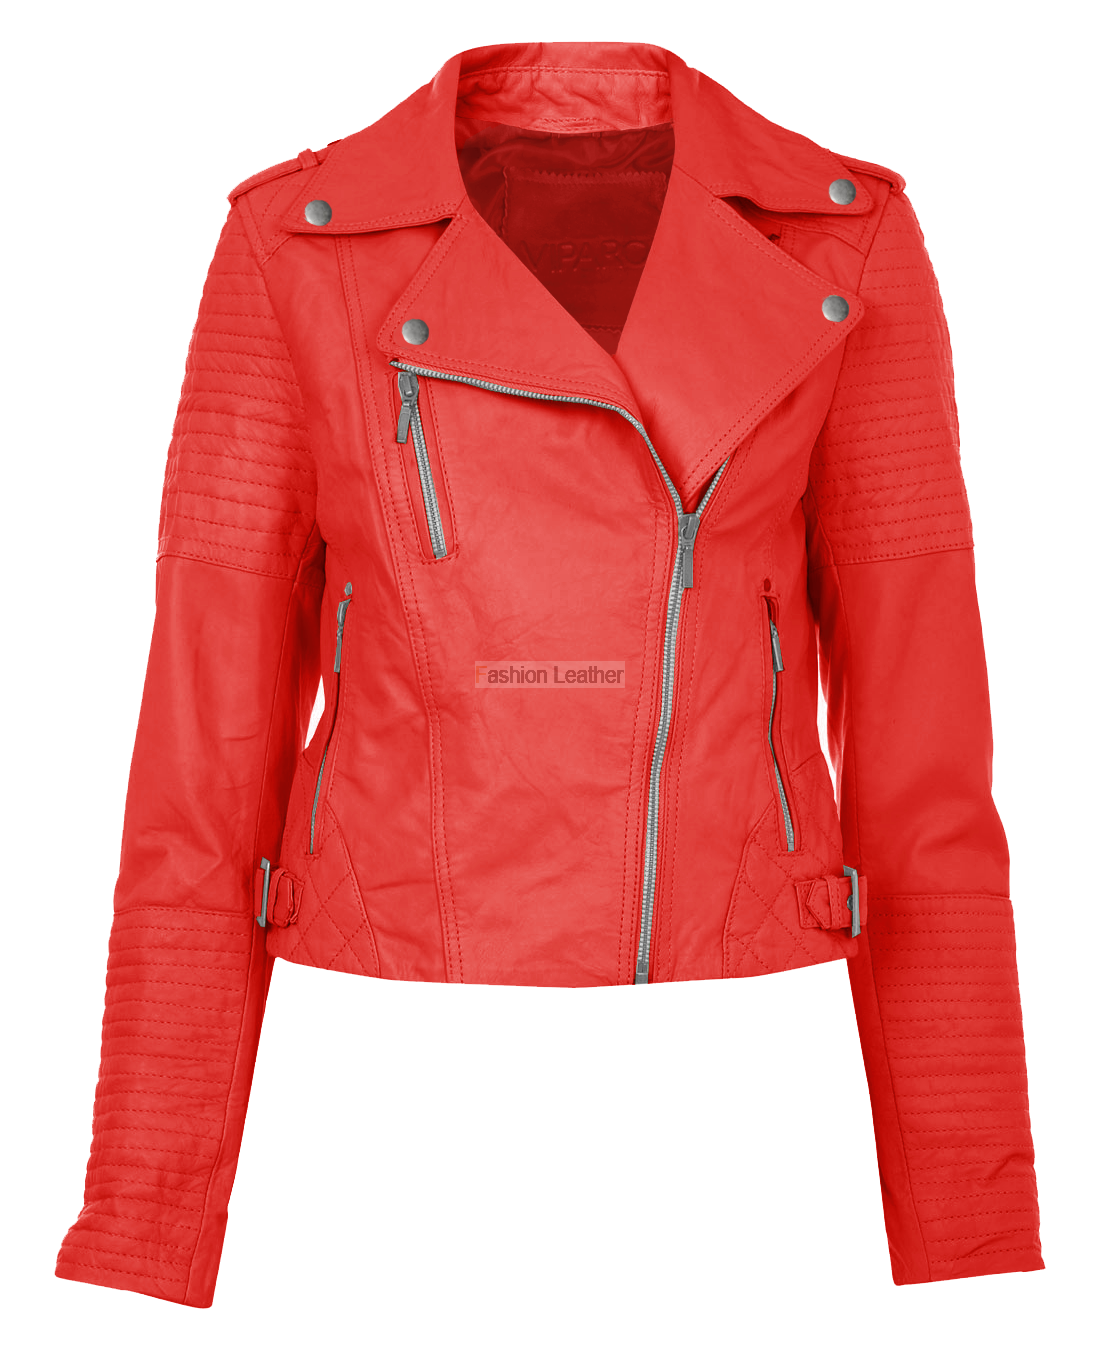 Download PNG image - Leather Red Jacket PNG Transparent Image 